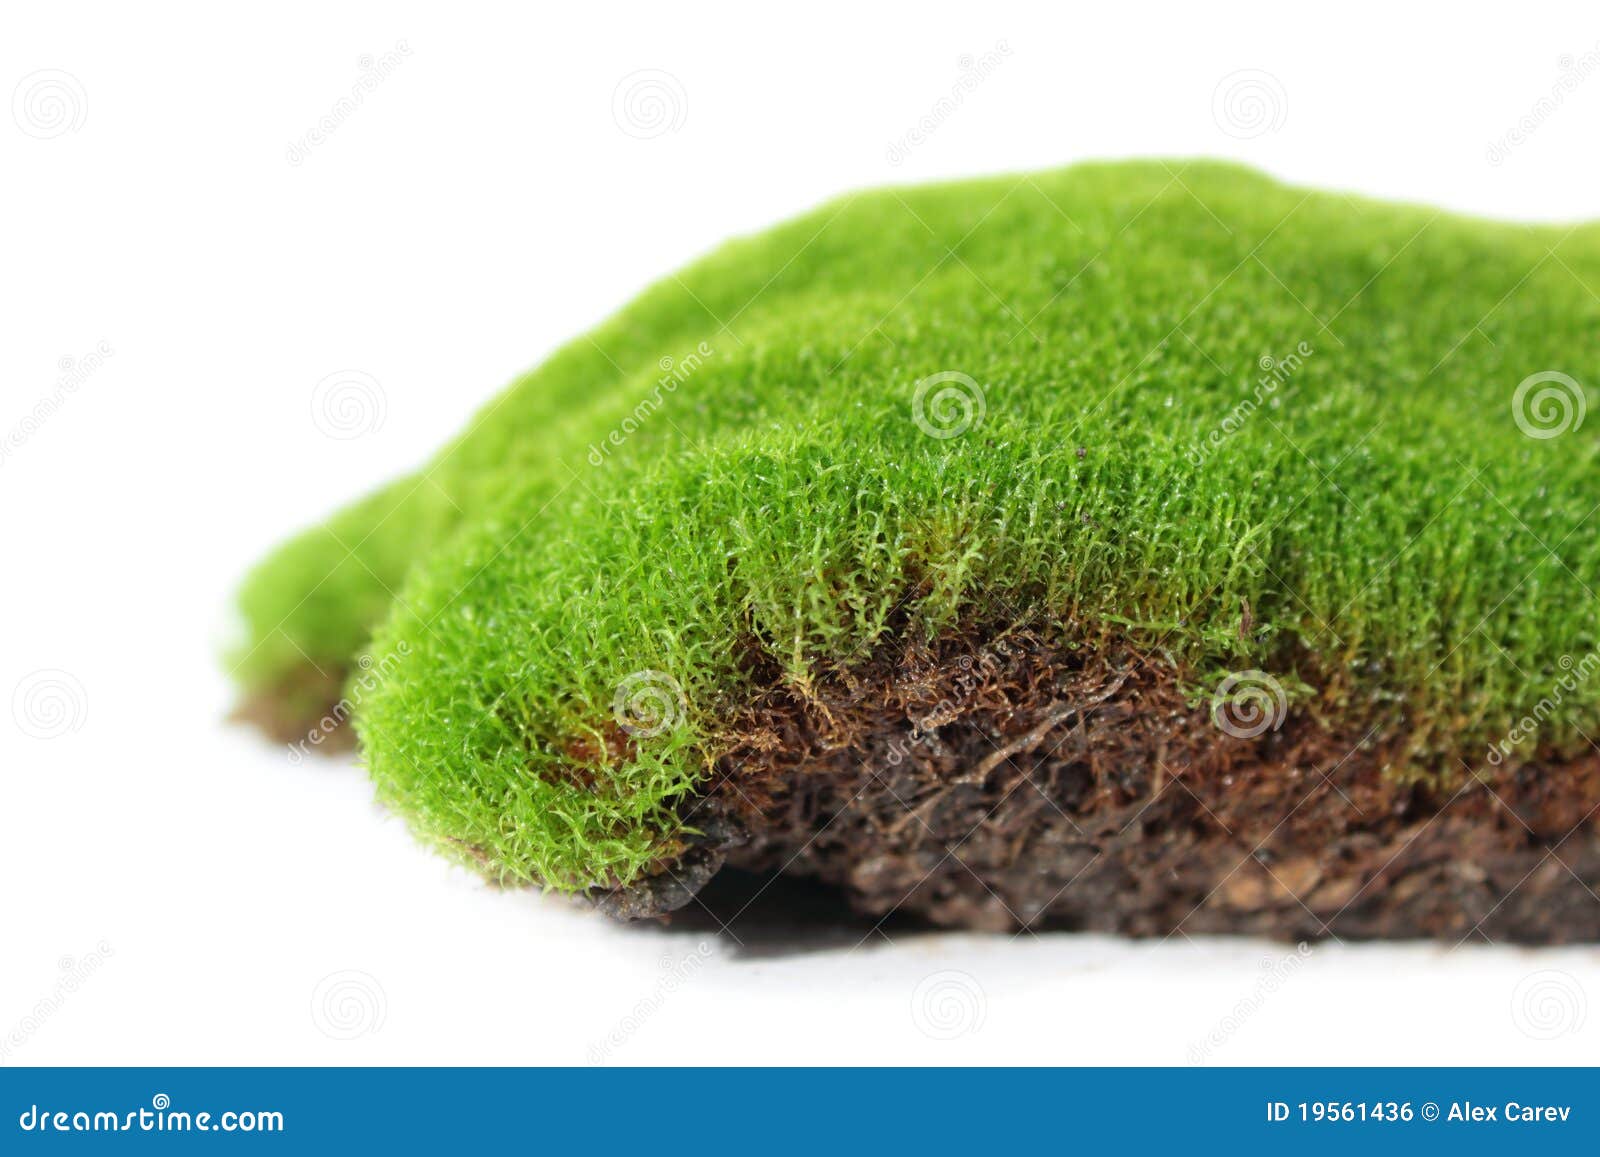 moss plant 19561436